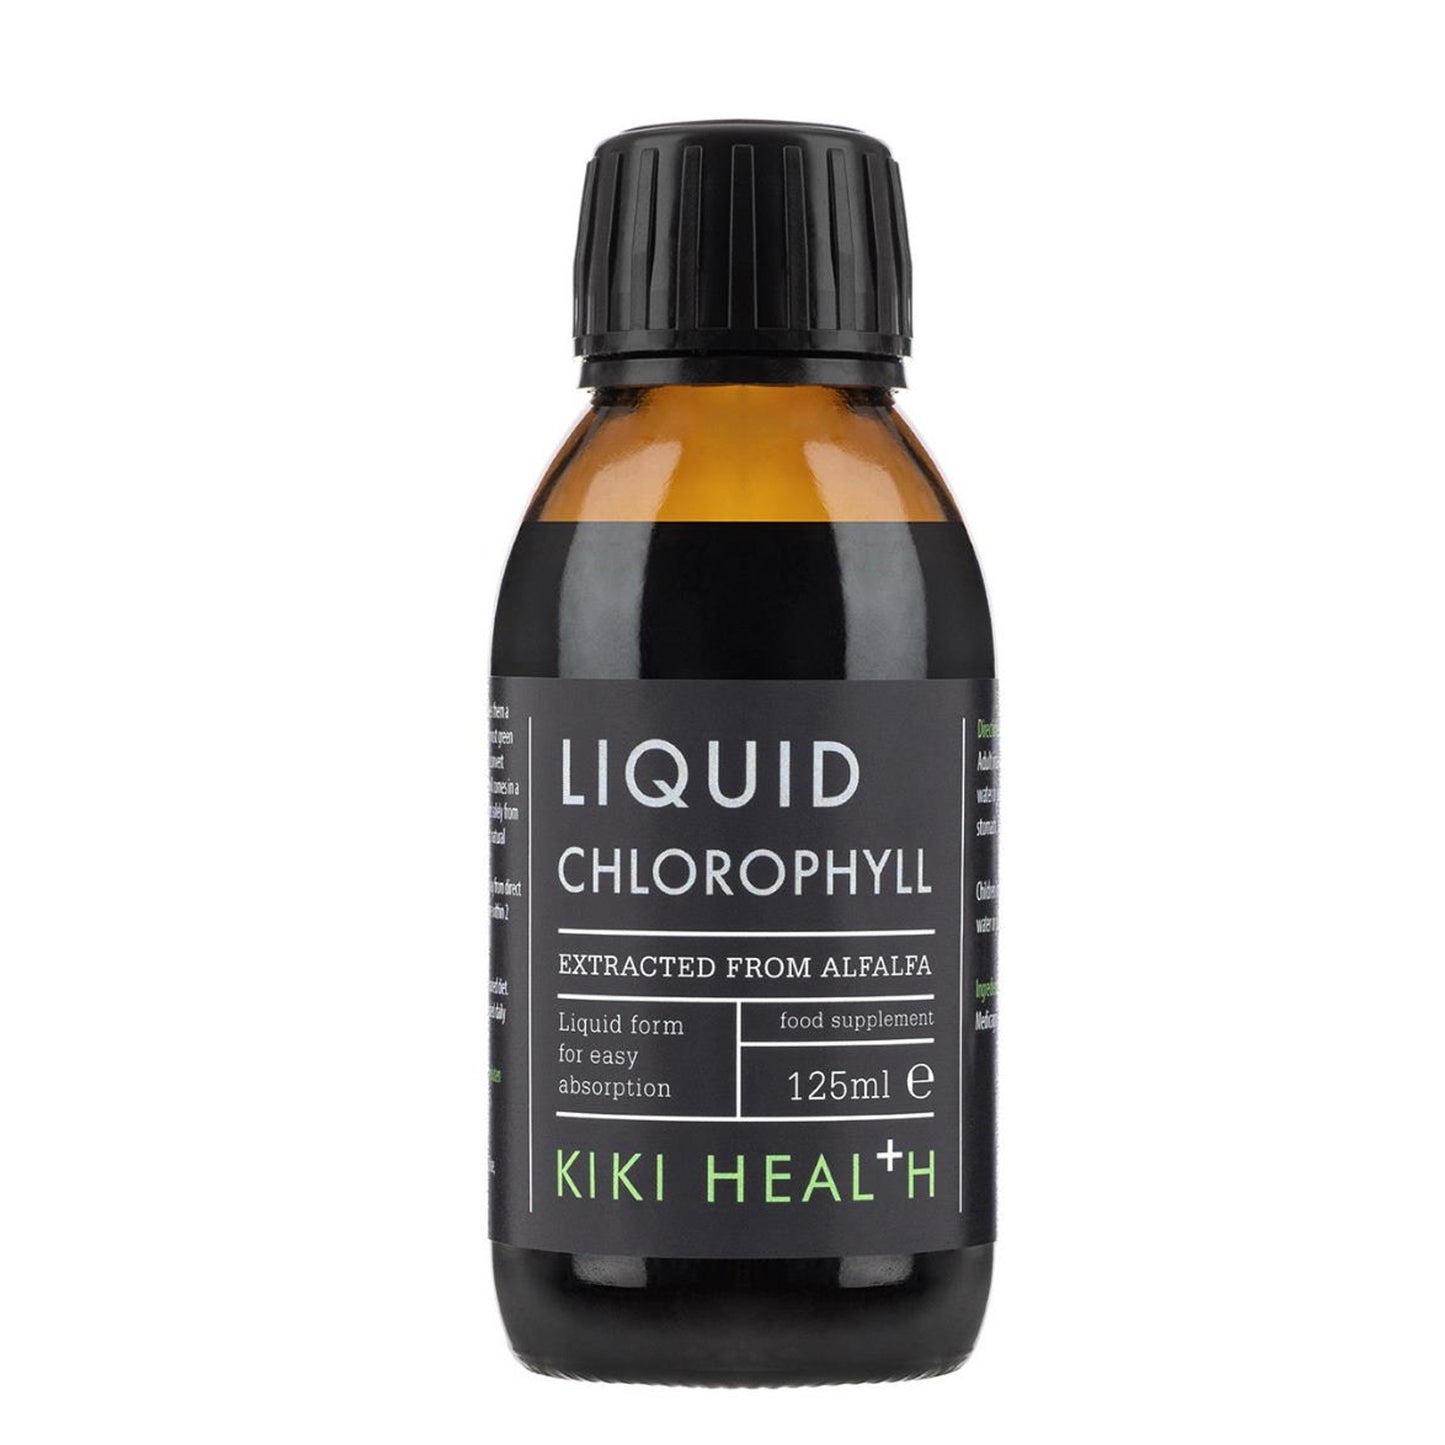 Kiki Health Liquid Chlorophyll 125ml